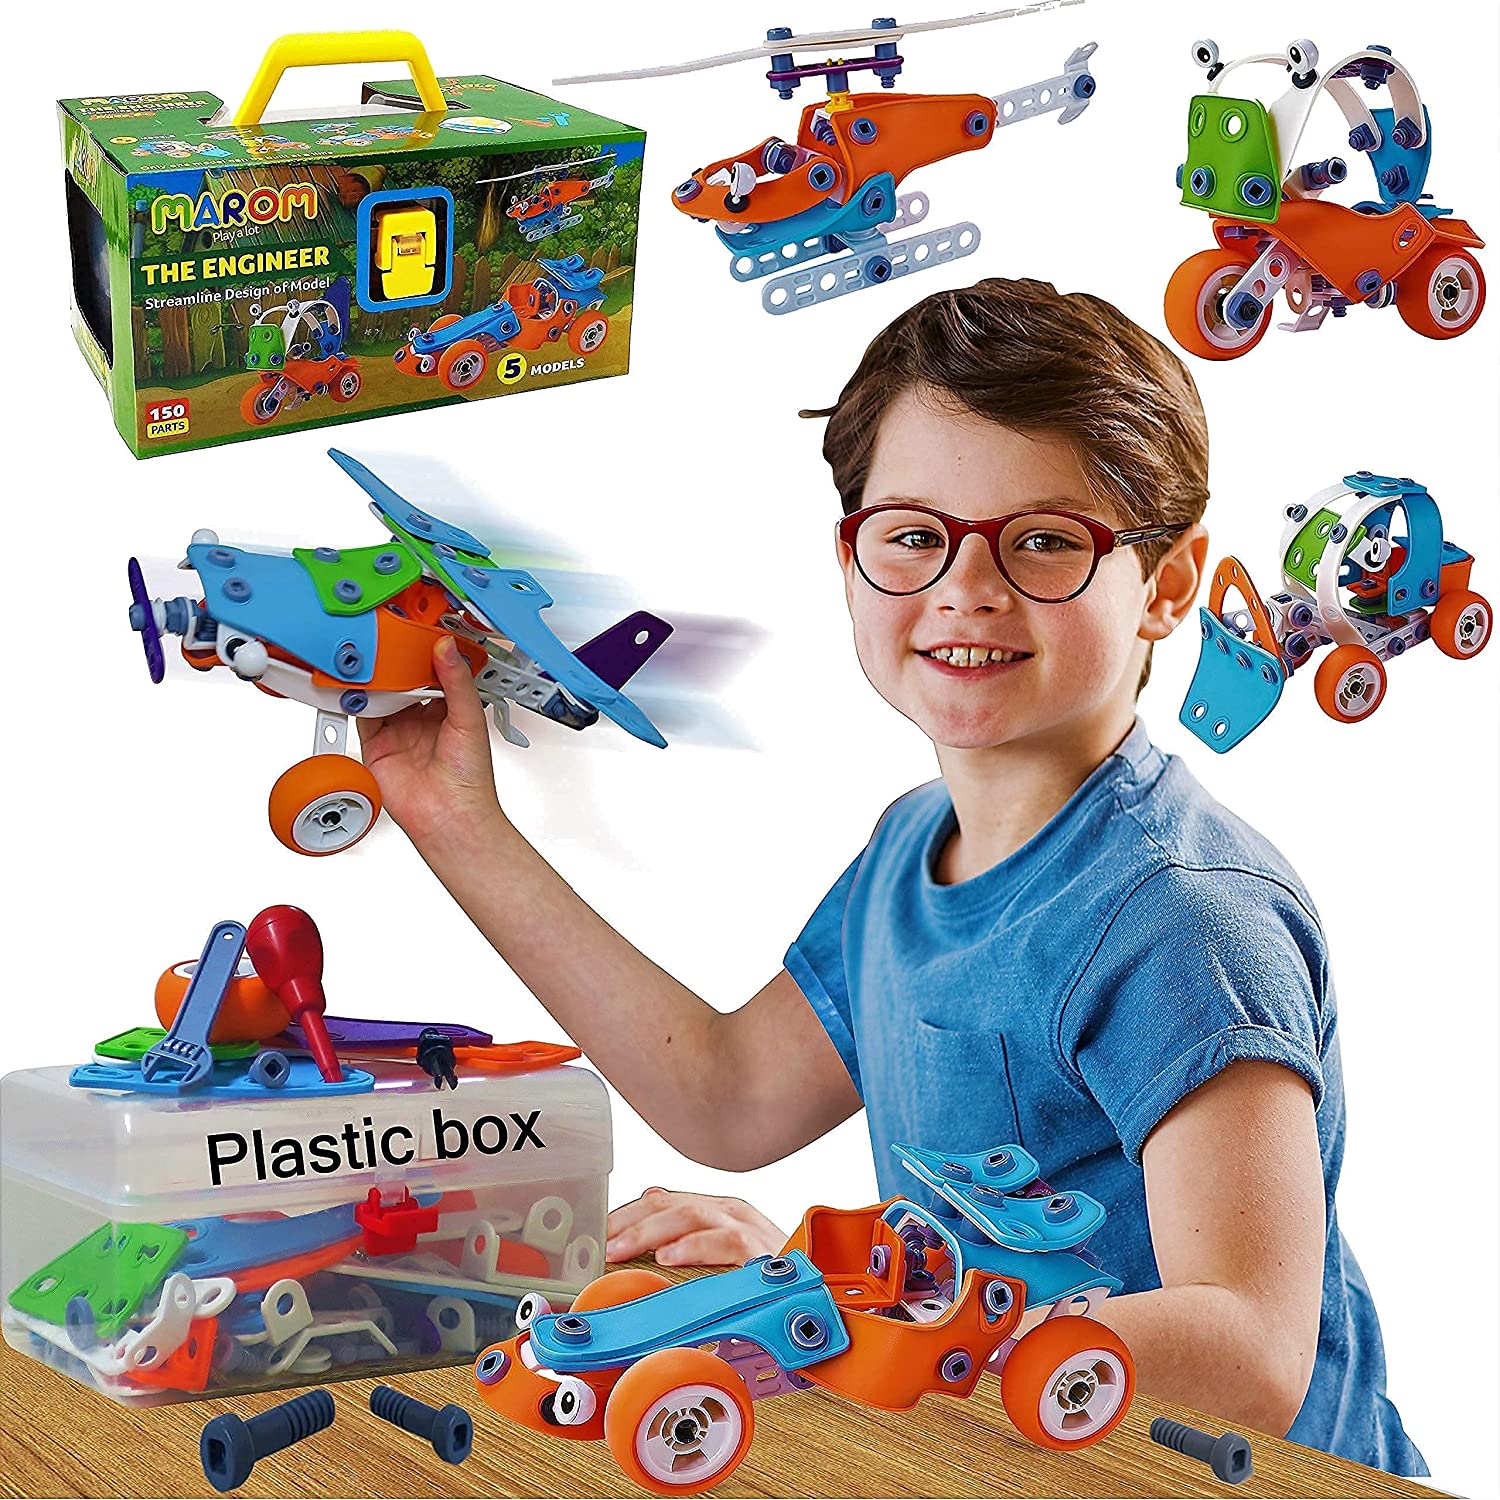 Stem Building Toys for Boys